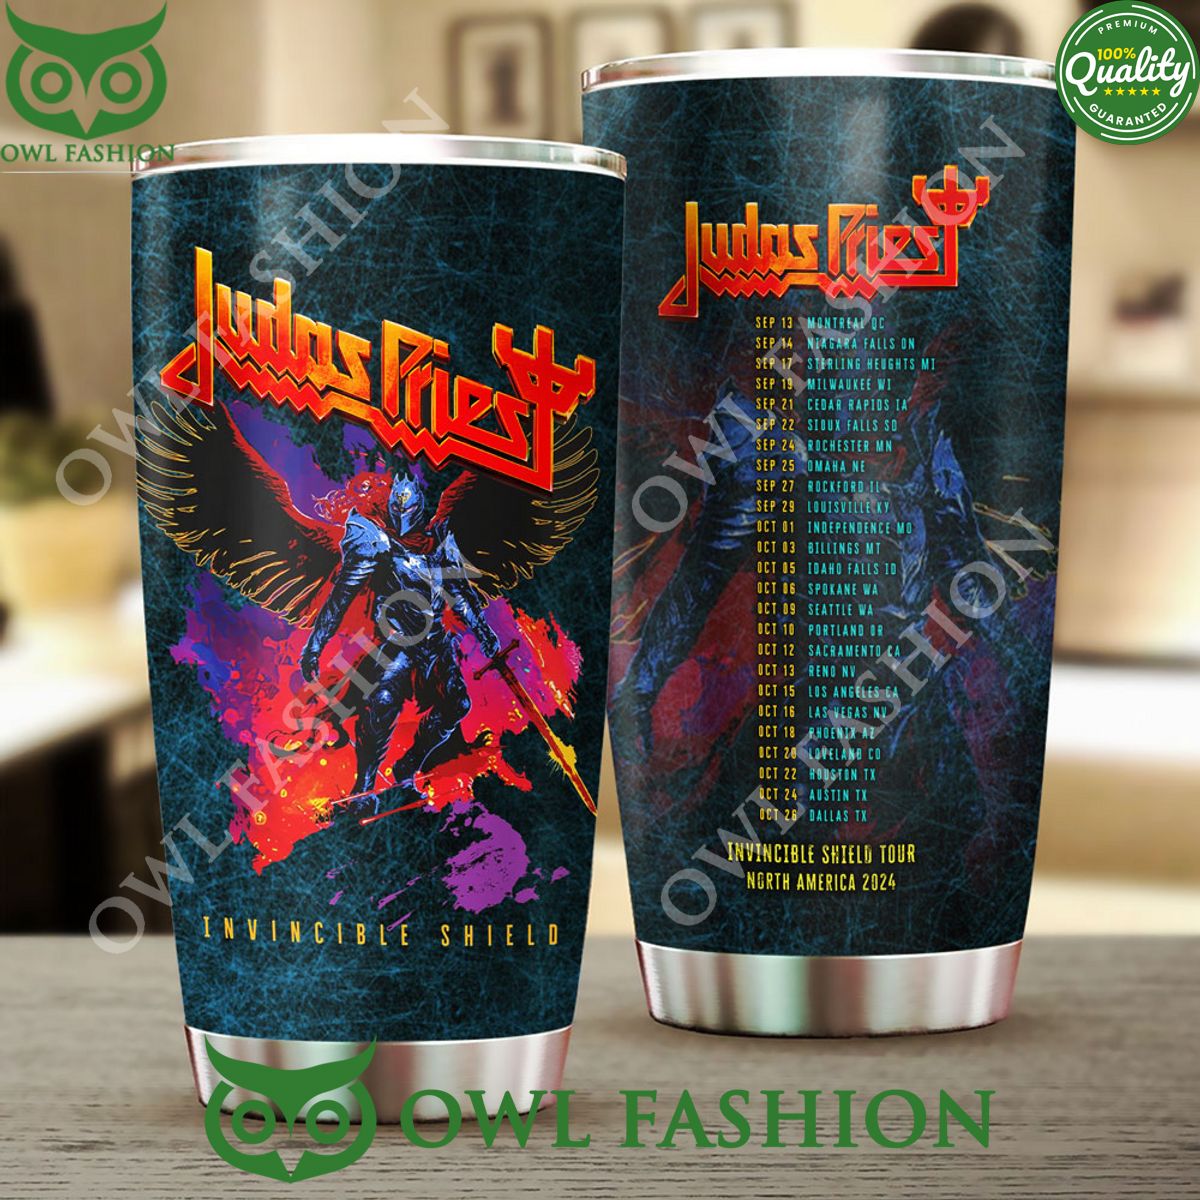 Judas Priest Band Invincible Shield Tumbler Cup You look too weak